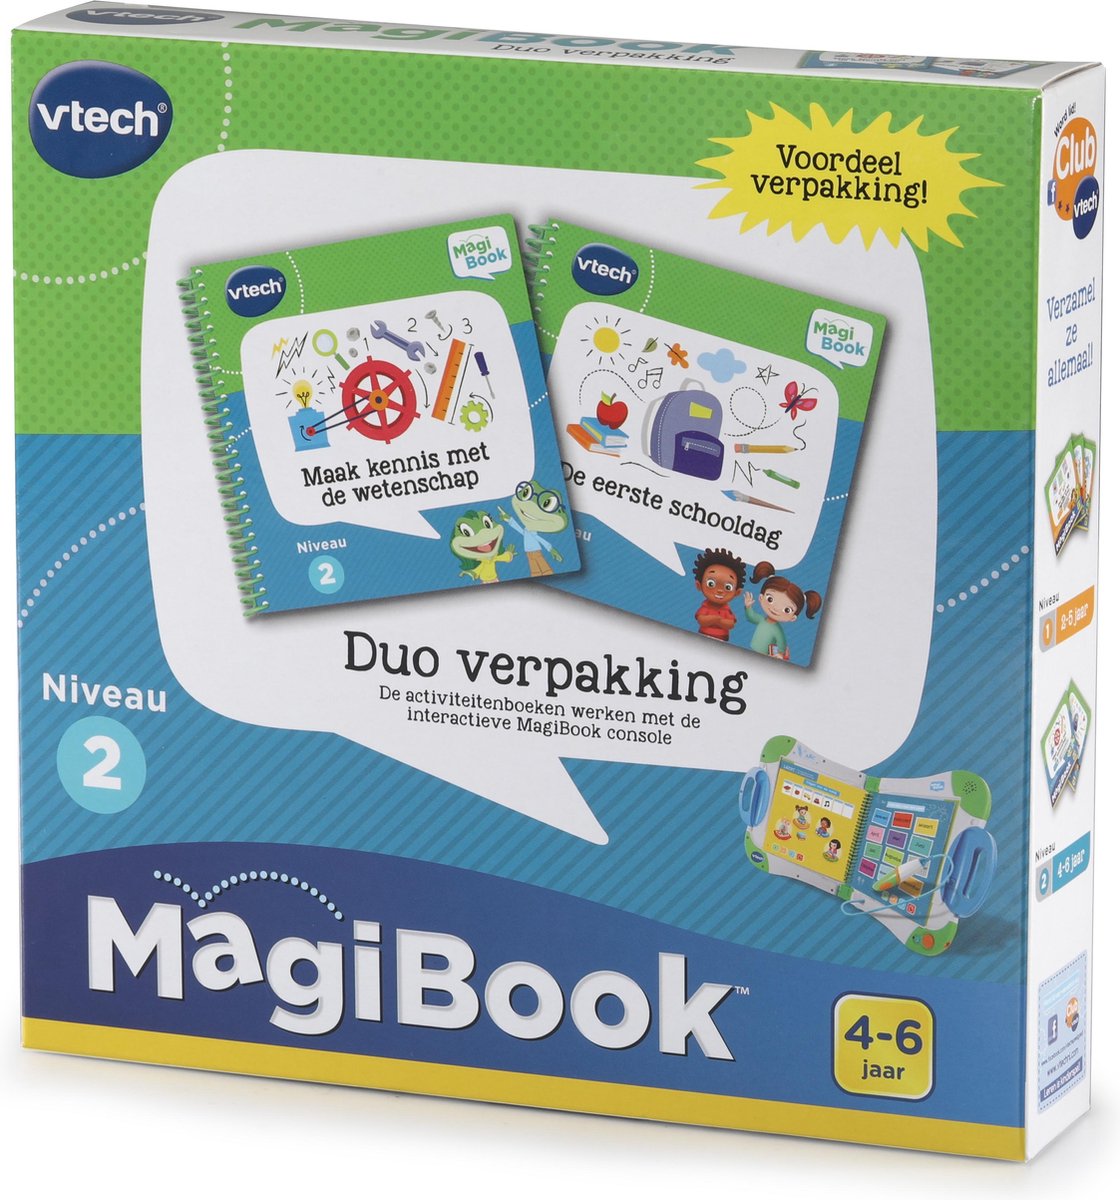 VTech MagiBook Duo verpakking 4-6 jaar | bol.com